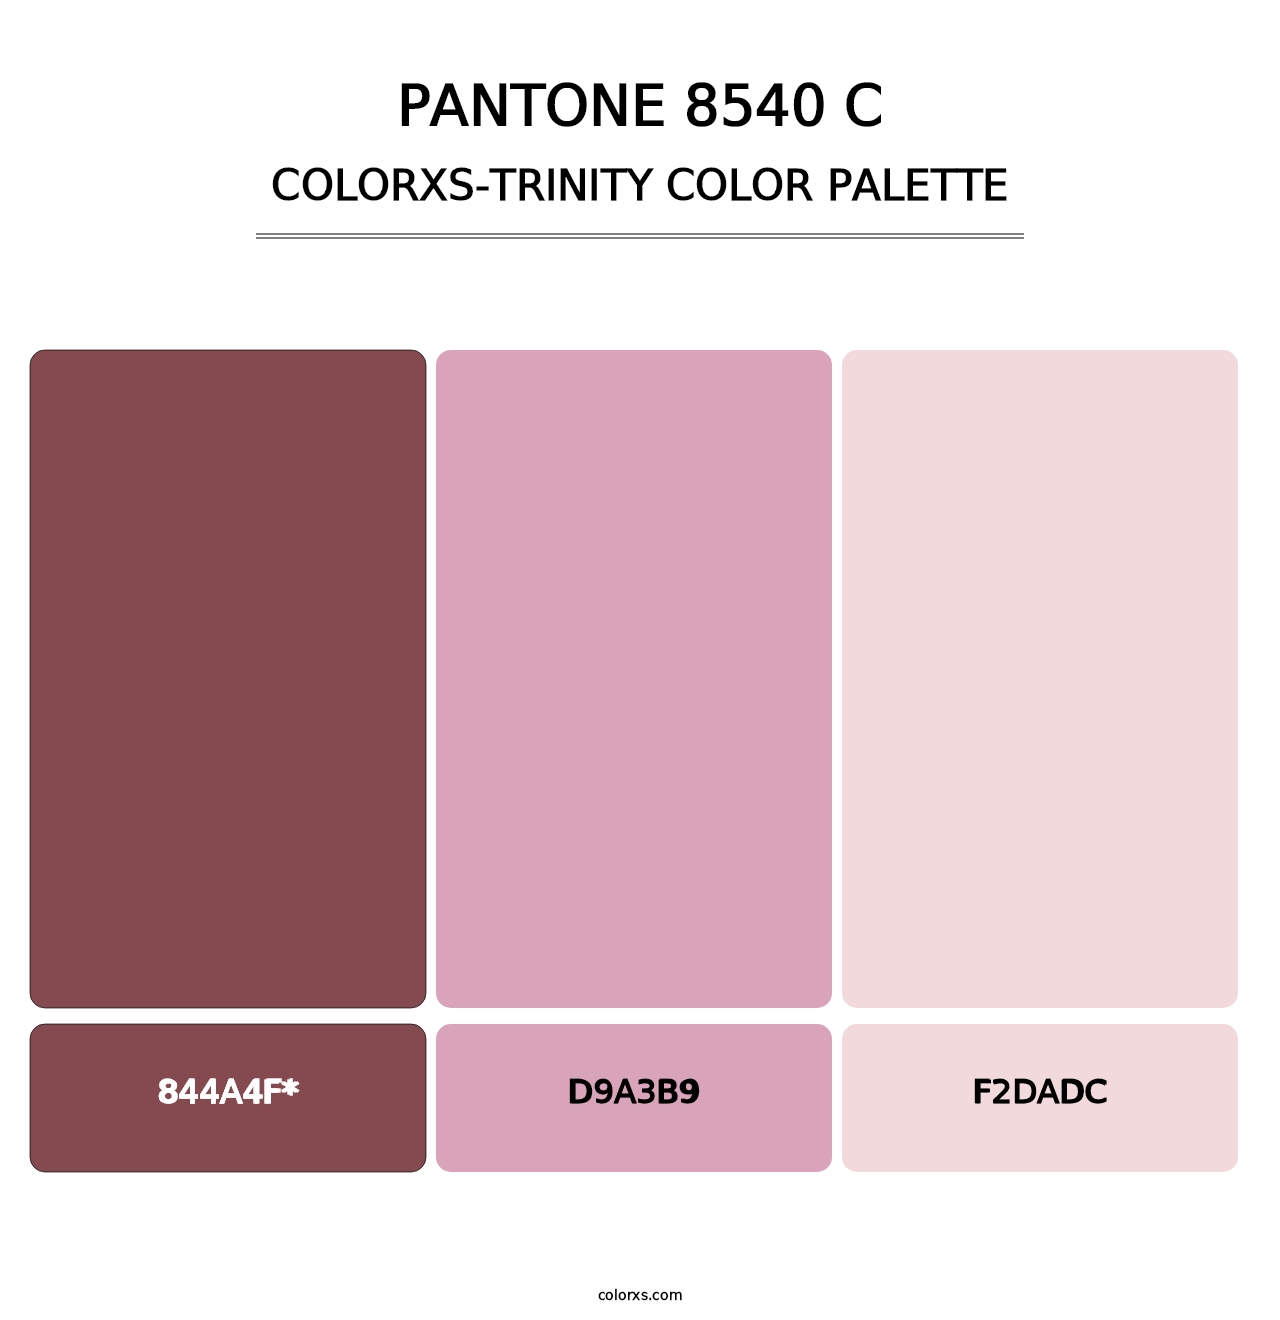 PANTONE 8540 C - Colorxs Trinity Palette